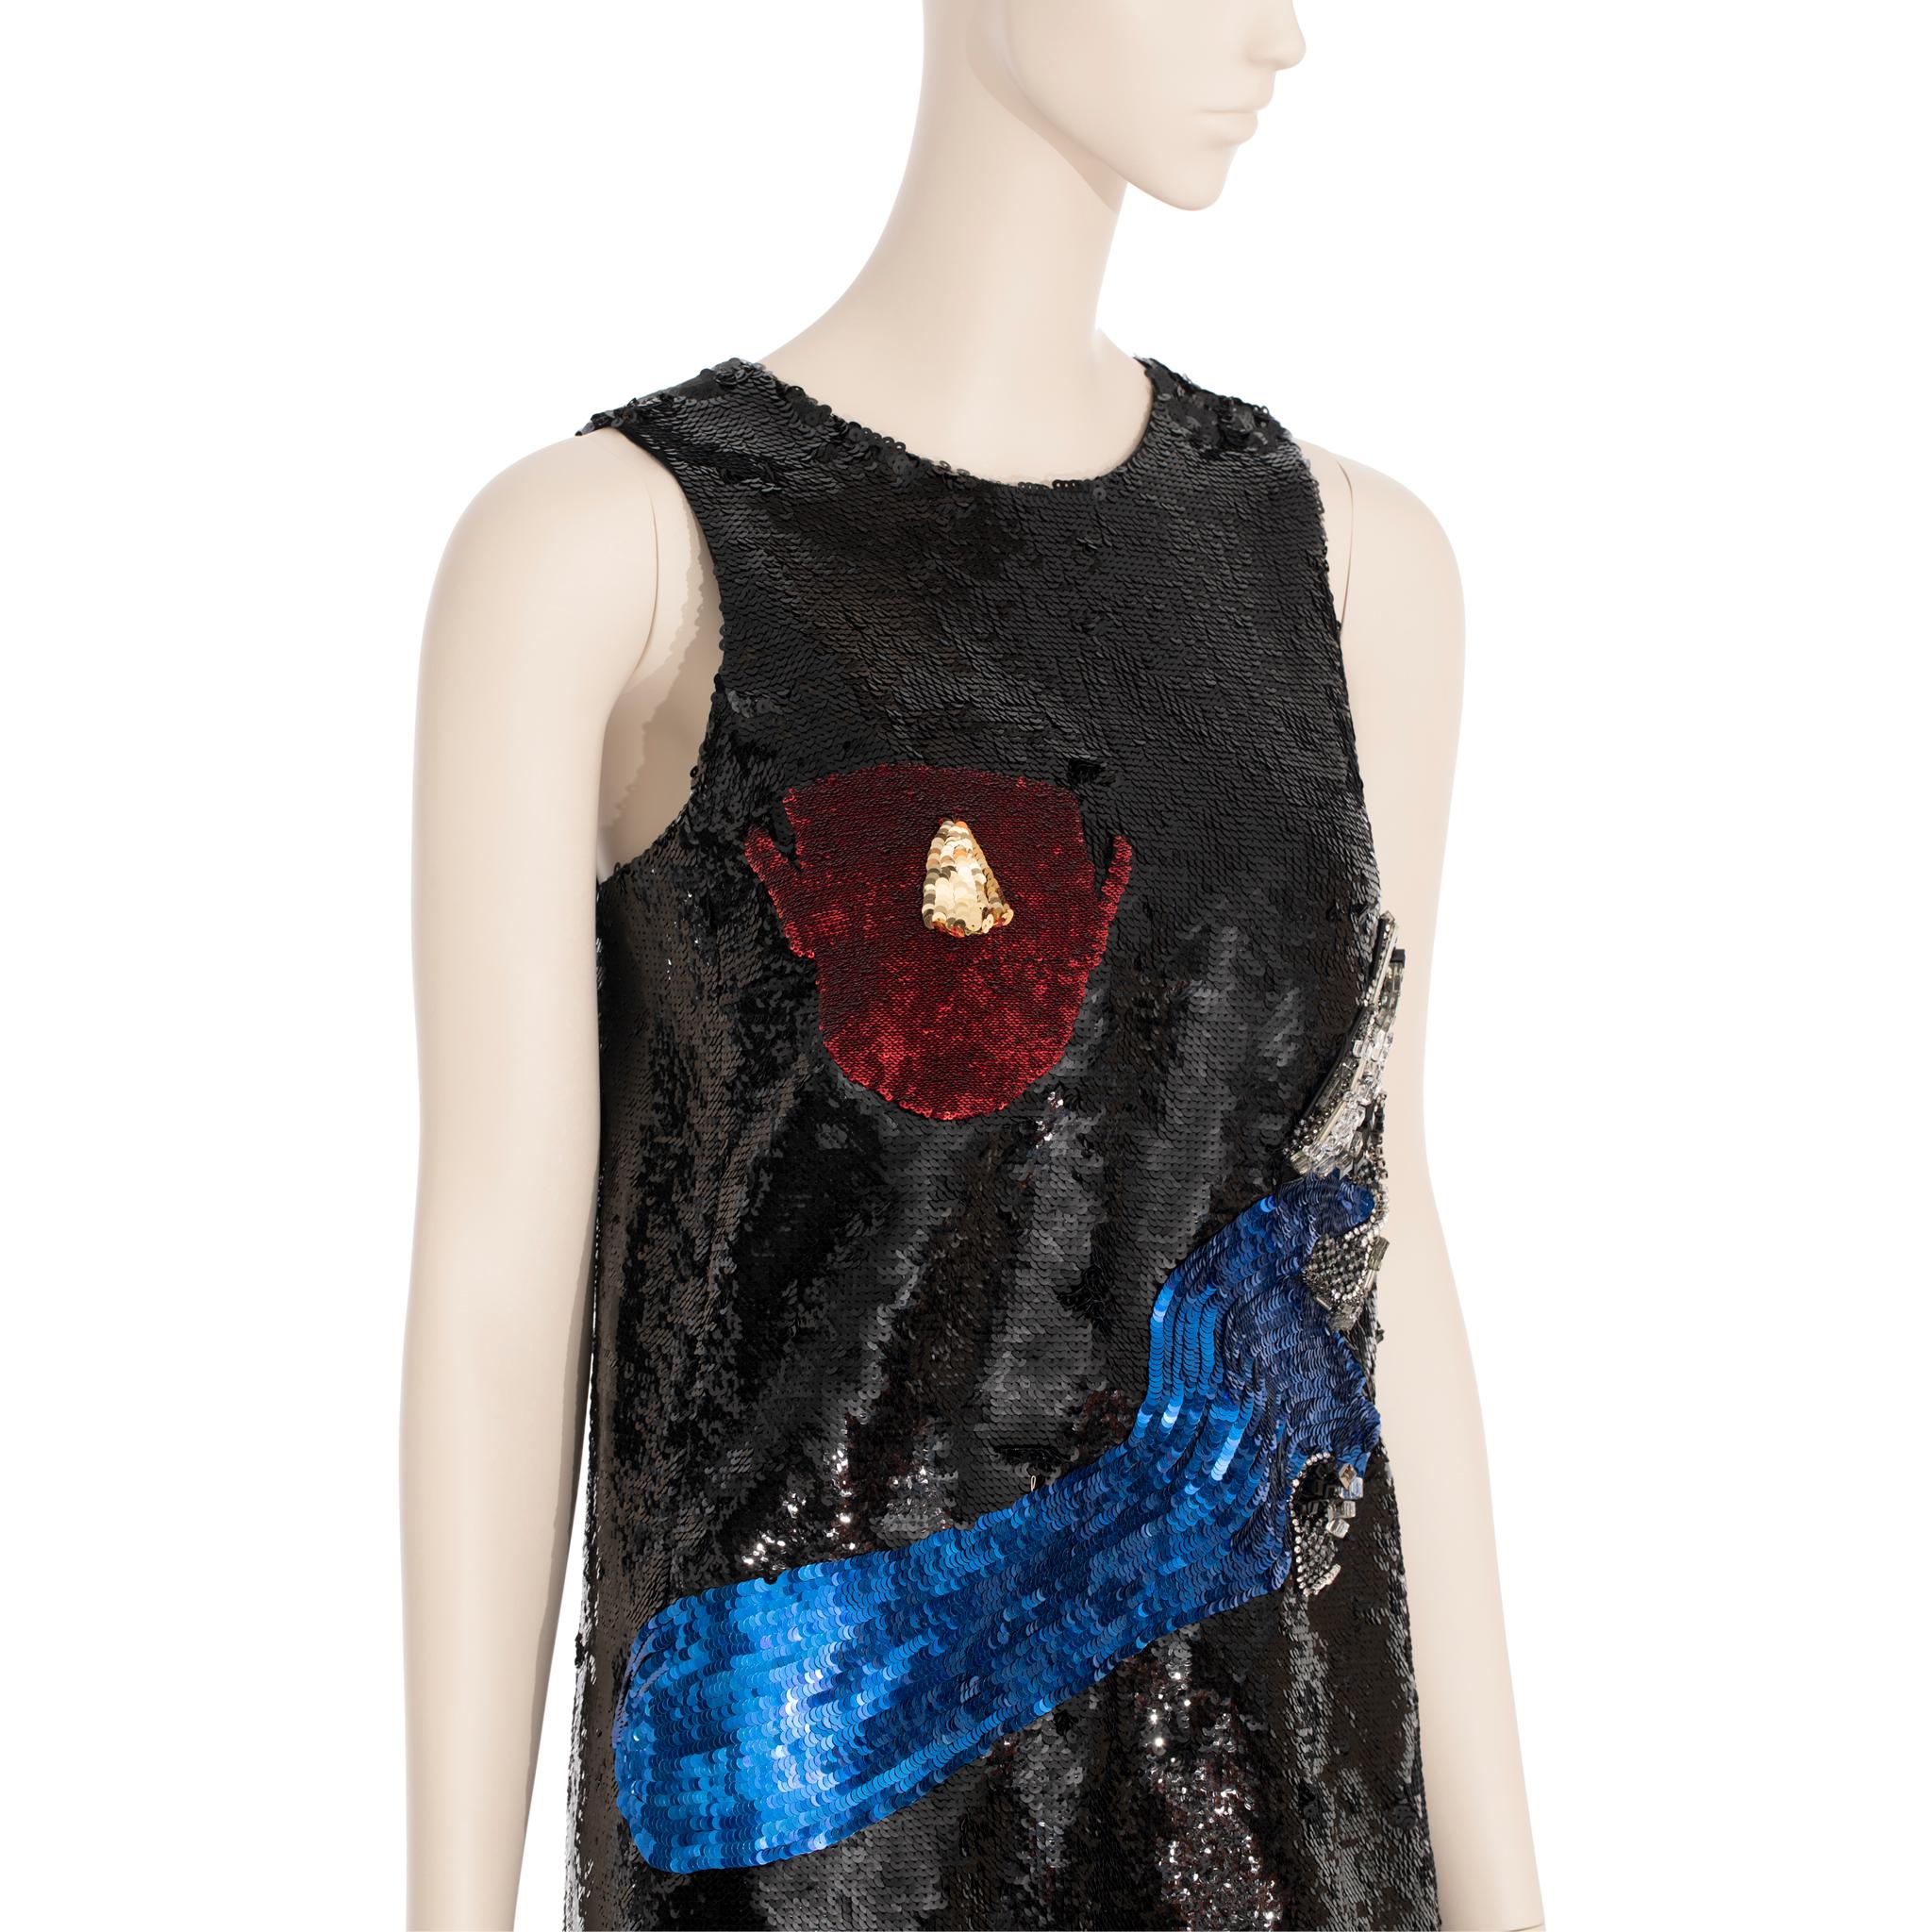 Saint Laurent X John Baldessari by Hedi Slimane Sequin Mini Dress Look #13 For Sale 4